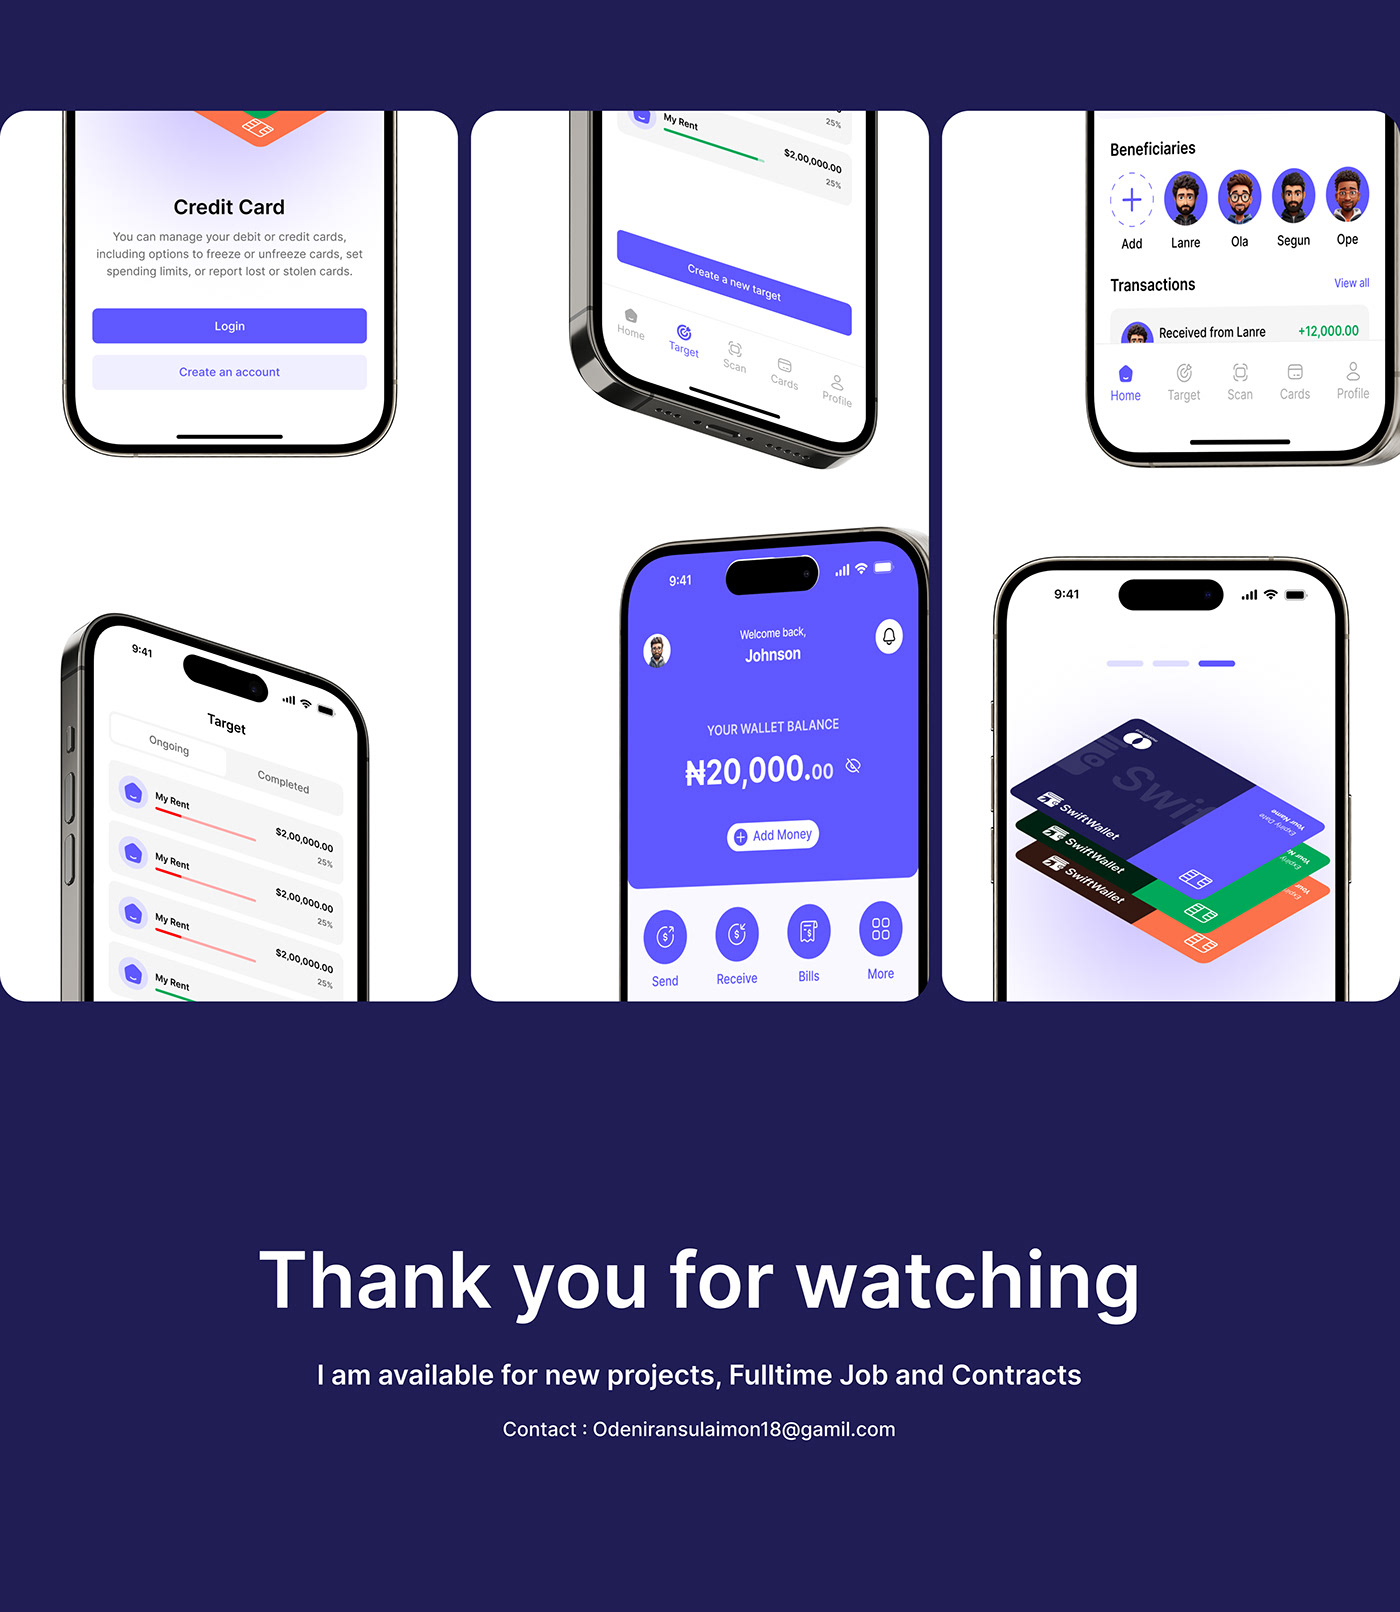 design uiux Case Study Fintech user interface user experience product design  product app design Mobile app